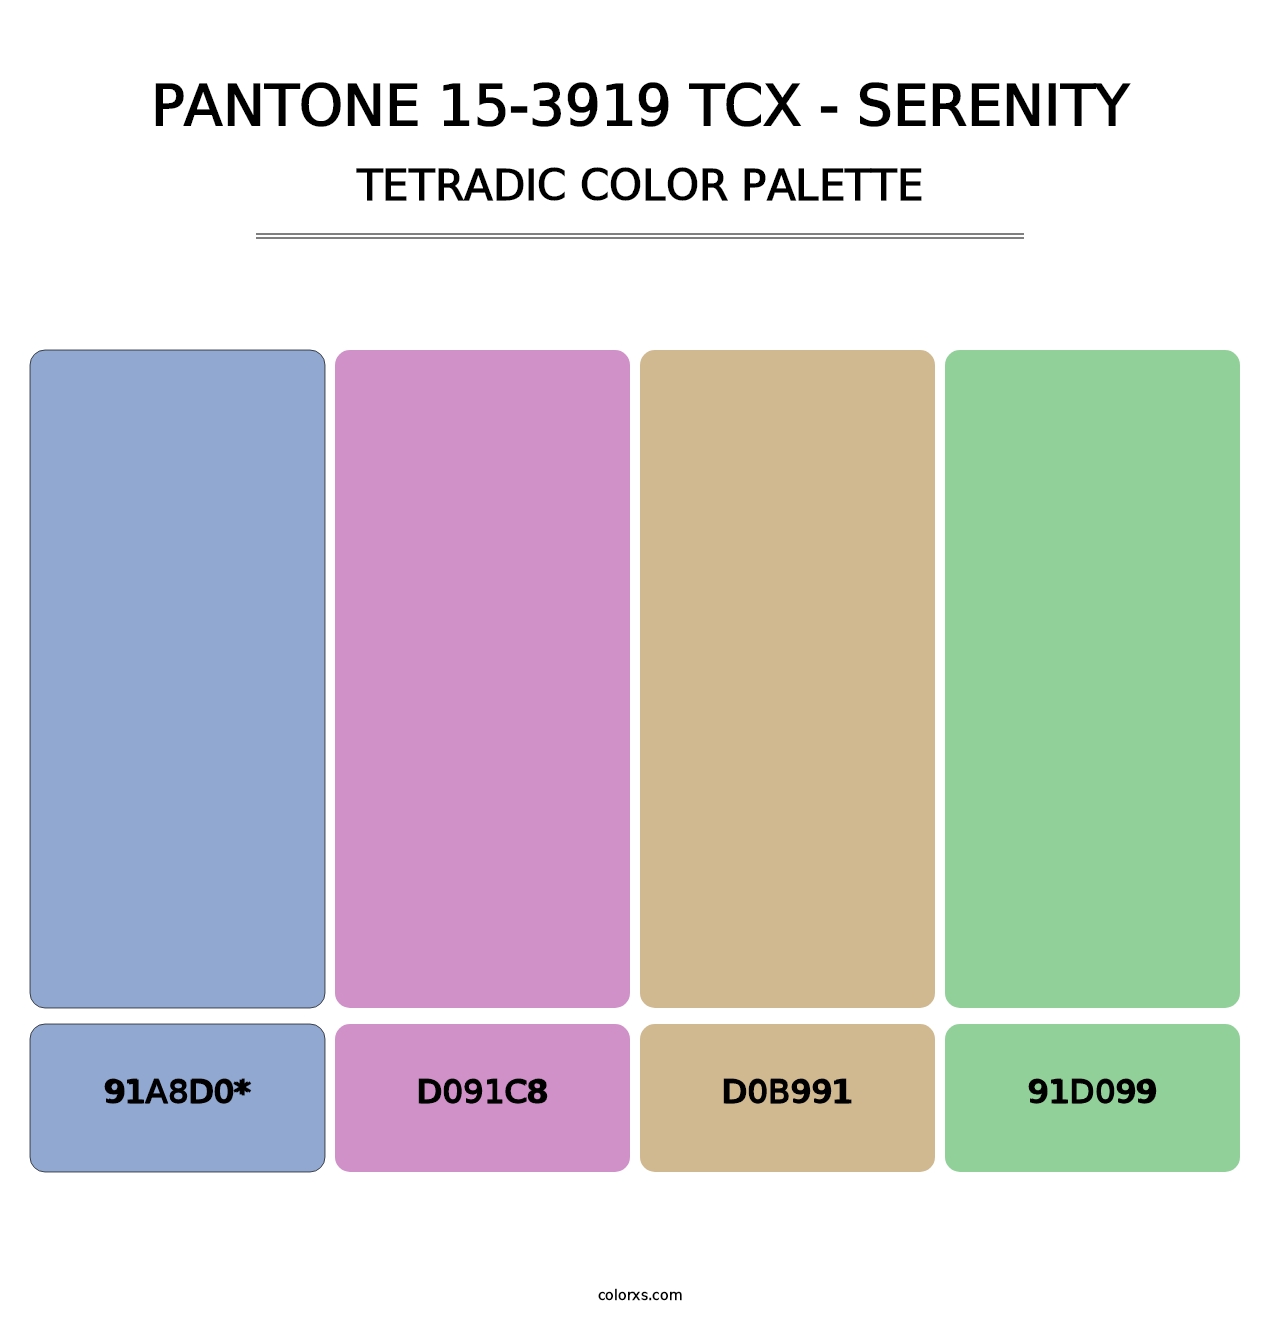 PANTONE 15-3919 TCX - Serenity - Tetradic Color Palette